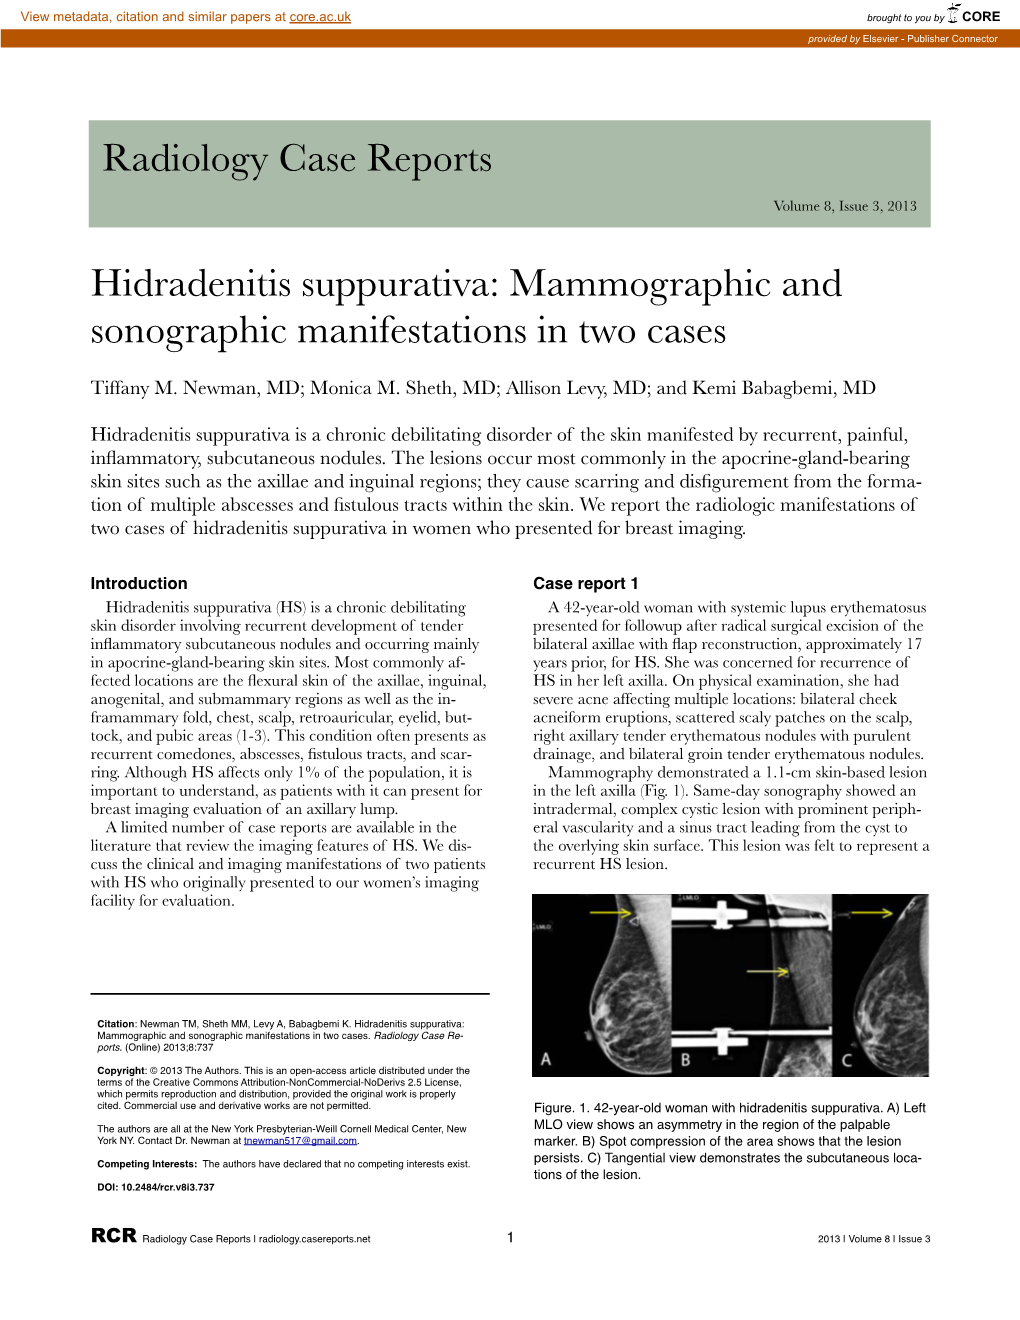 Hidradenitis Suppurativa: Mammographic and Sonographic Manifestations in Two Cases